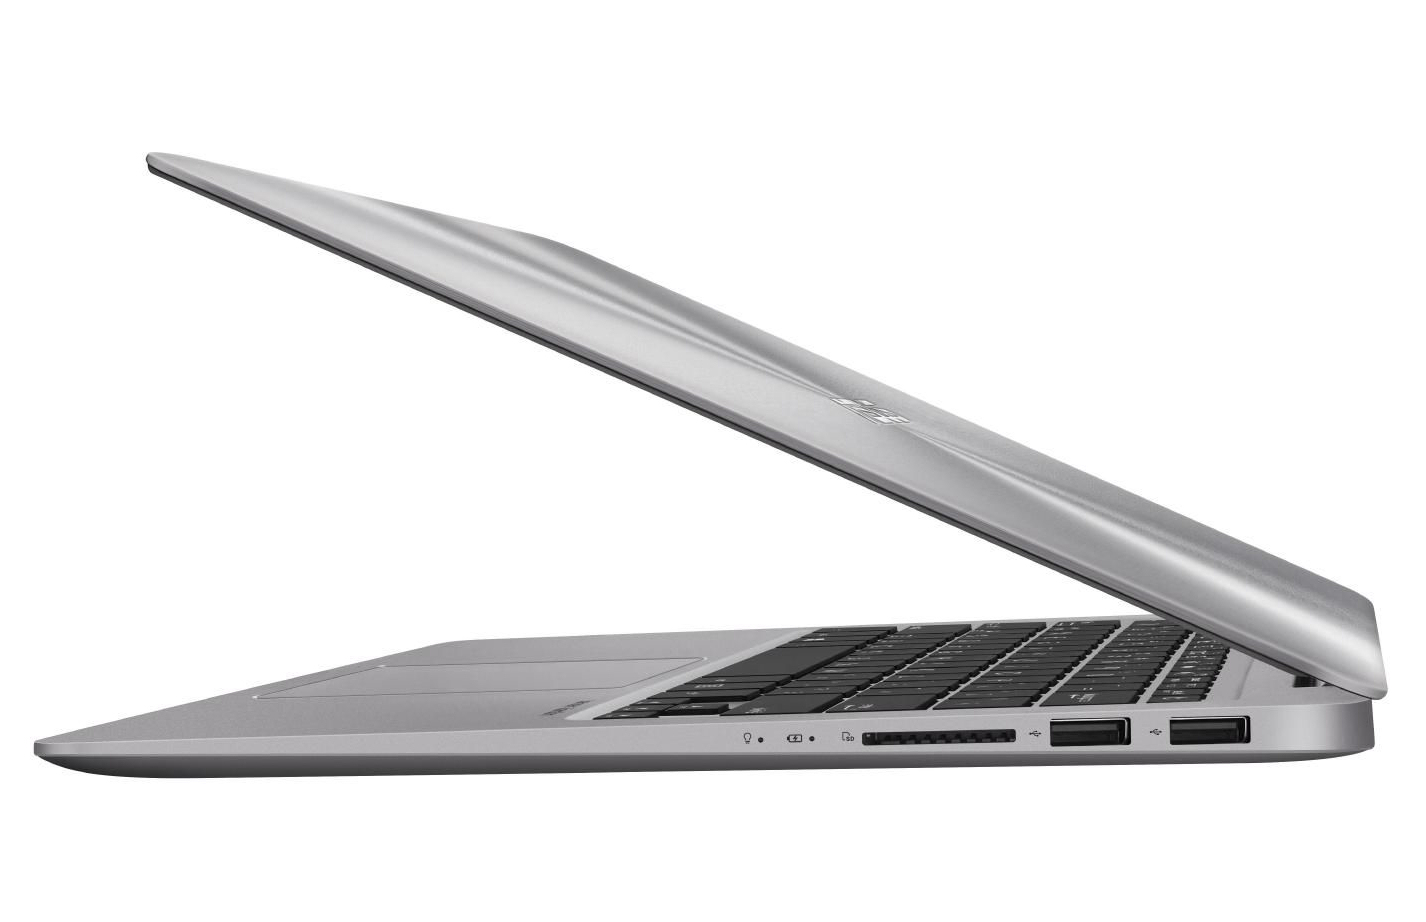 Asus ZenBook UX3410UQ (7500U, 940MX, Full HD) Laptop Review